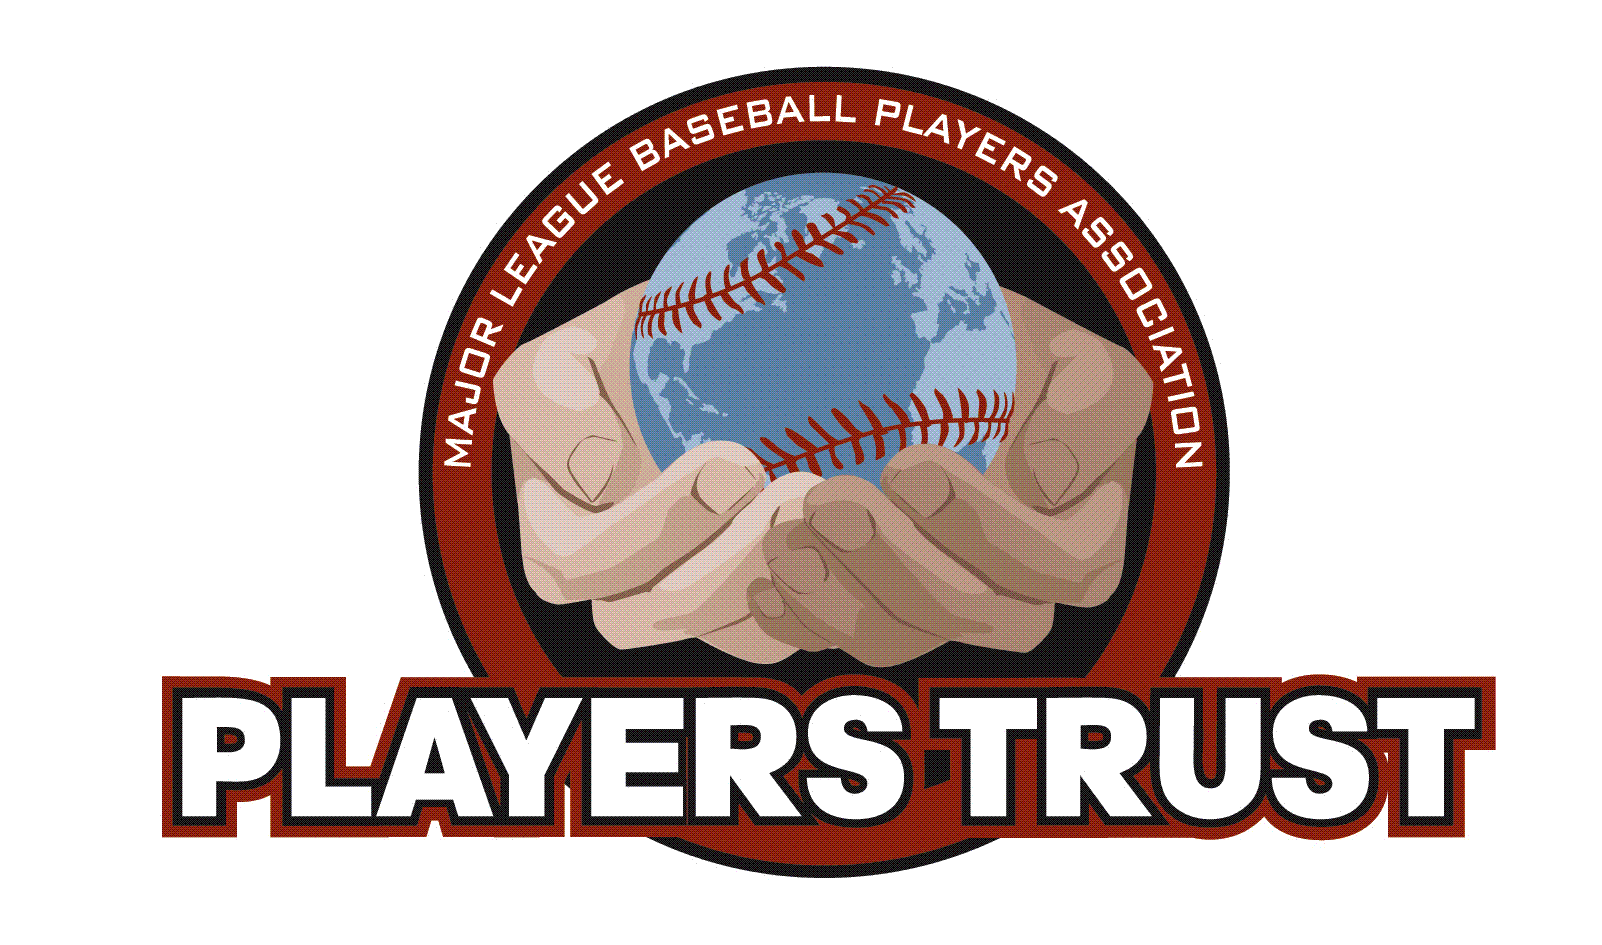 Major League Baseball Players Trust logo